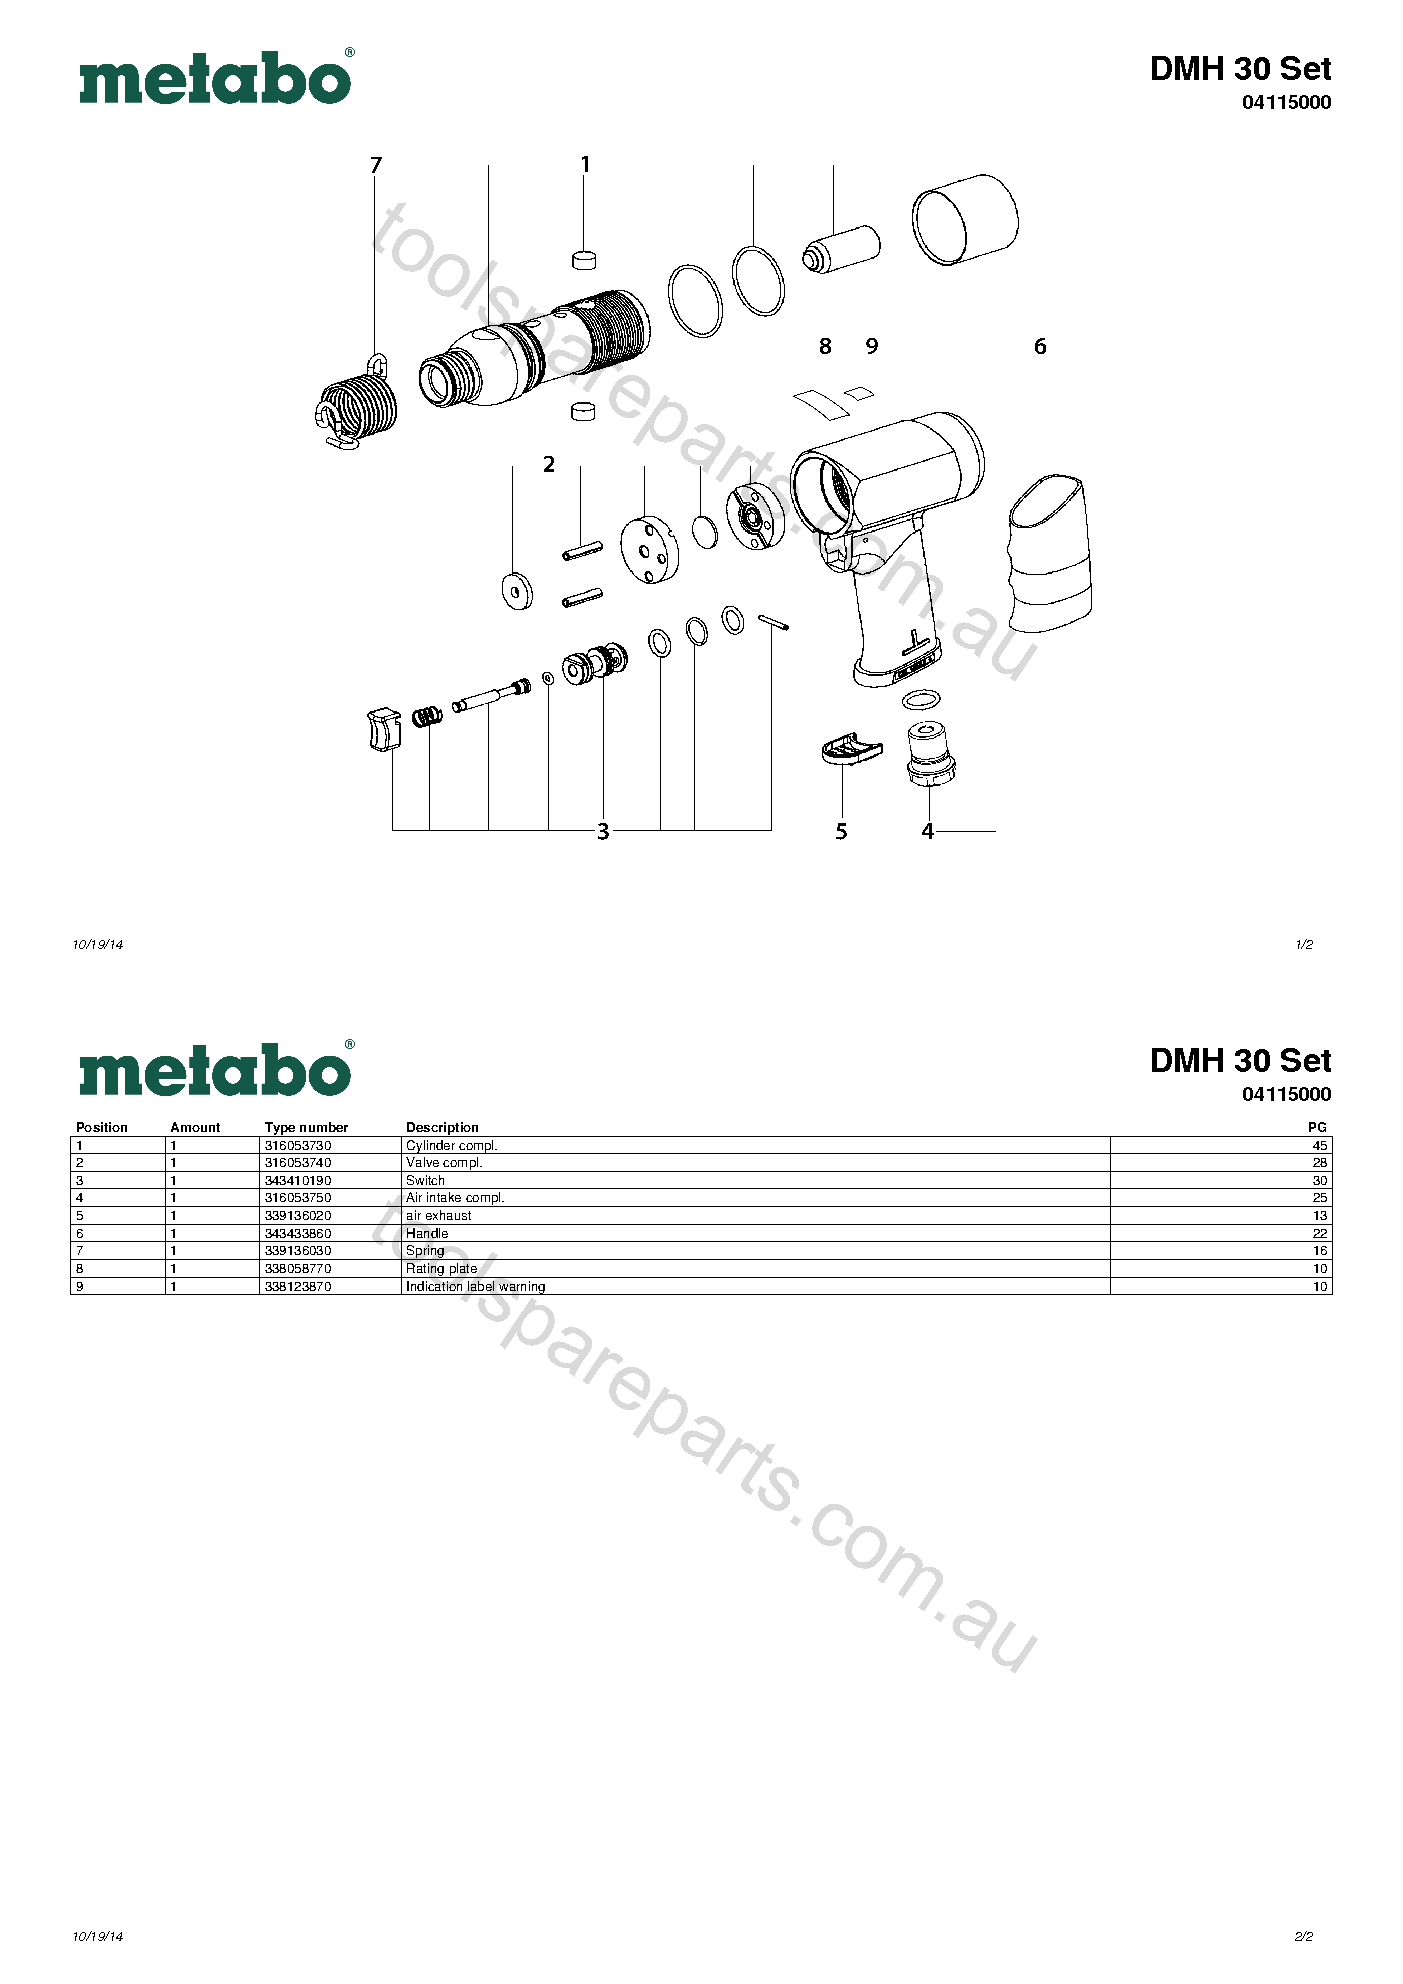 Metabo DMH 30 Set 04115000  Diagram 1